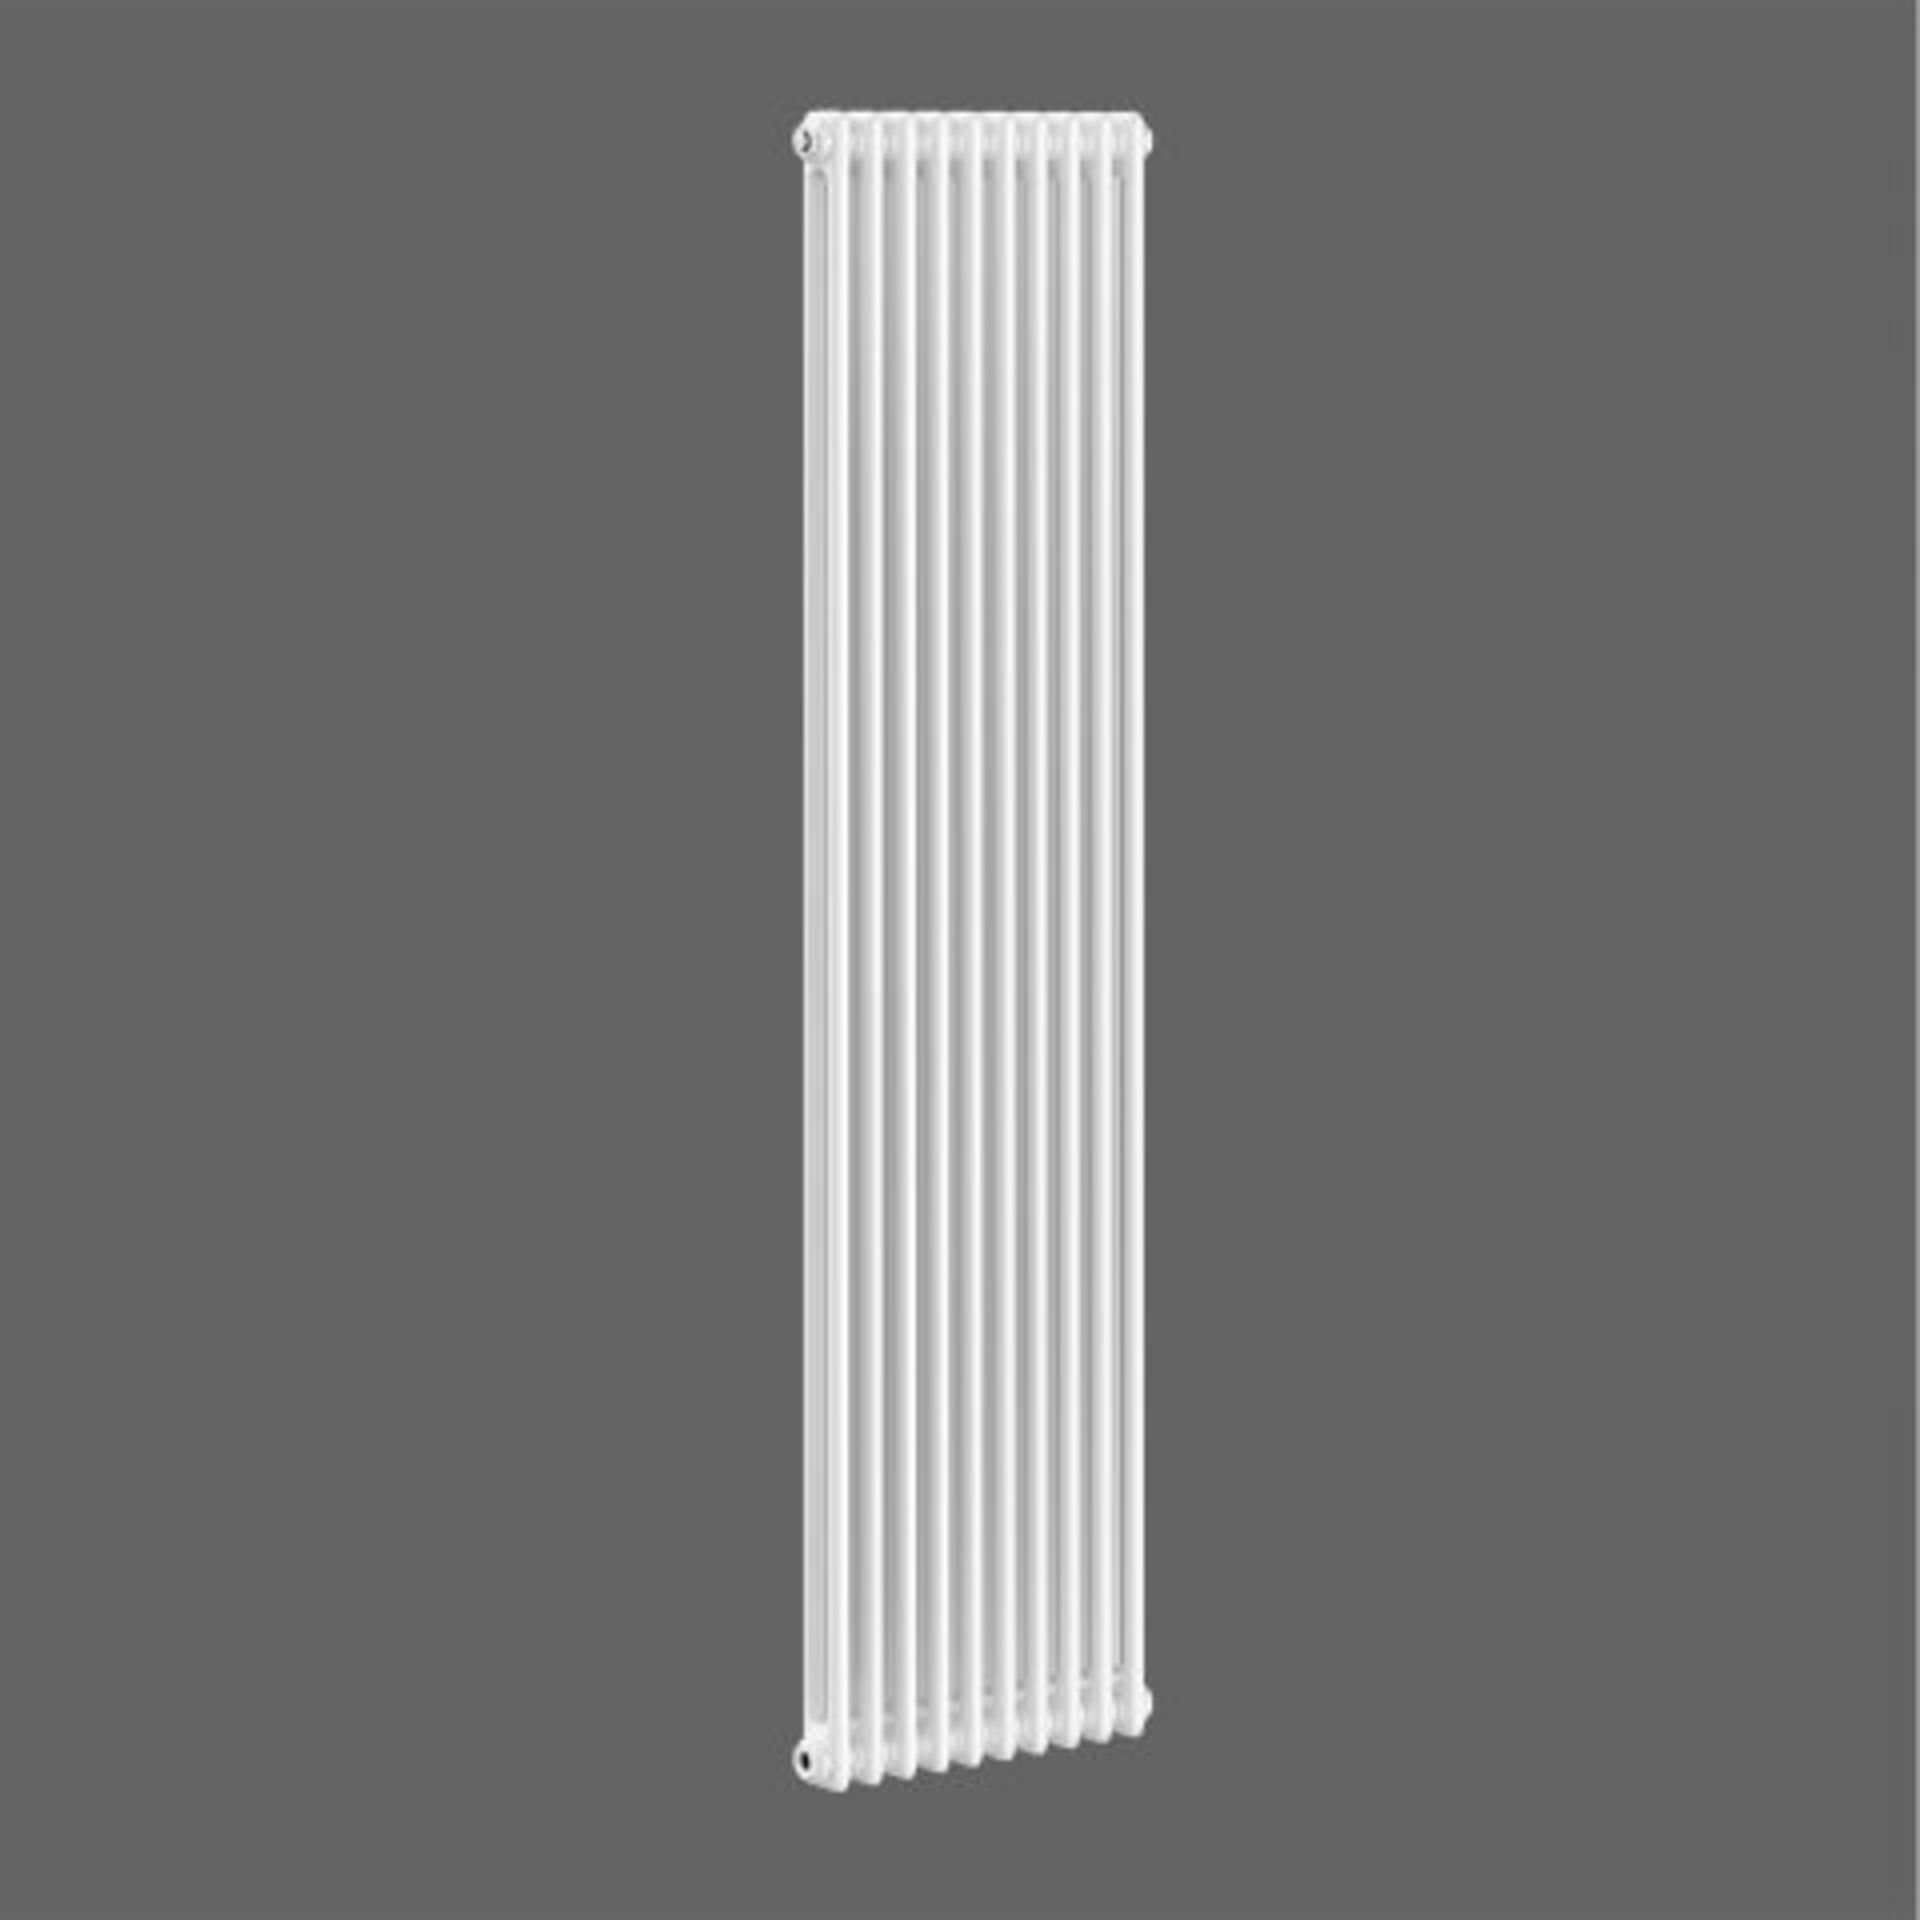 (REF109) 1800x465mm White Double Panel Vertical Colosseum Radiator - Roma Premium. RRP £299.99. - Image 2 of 3